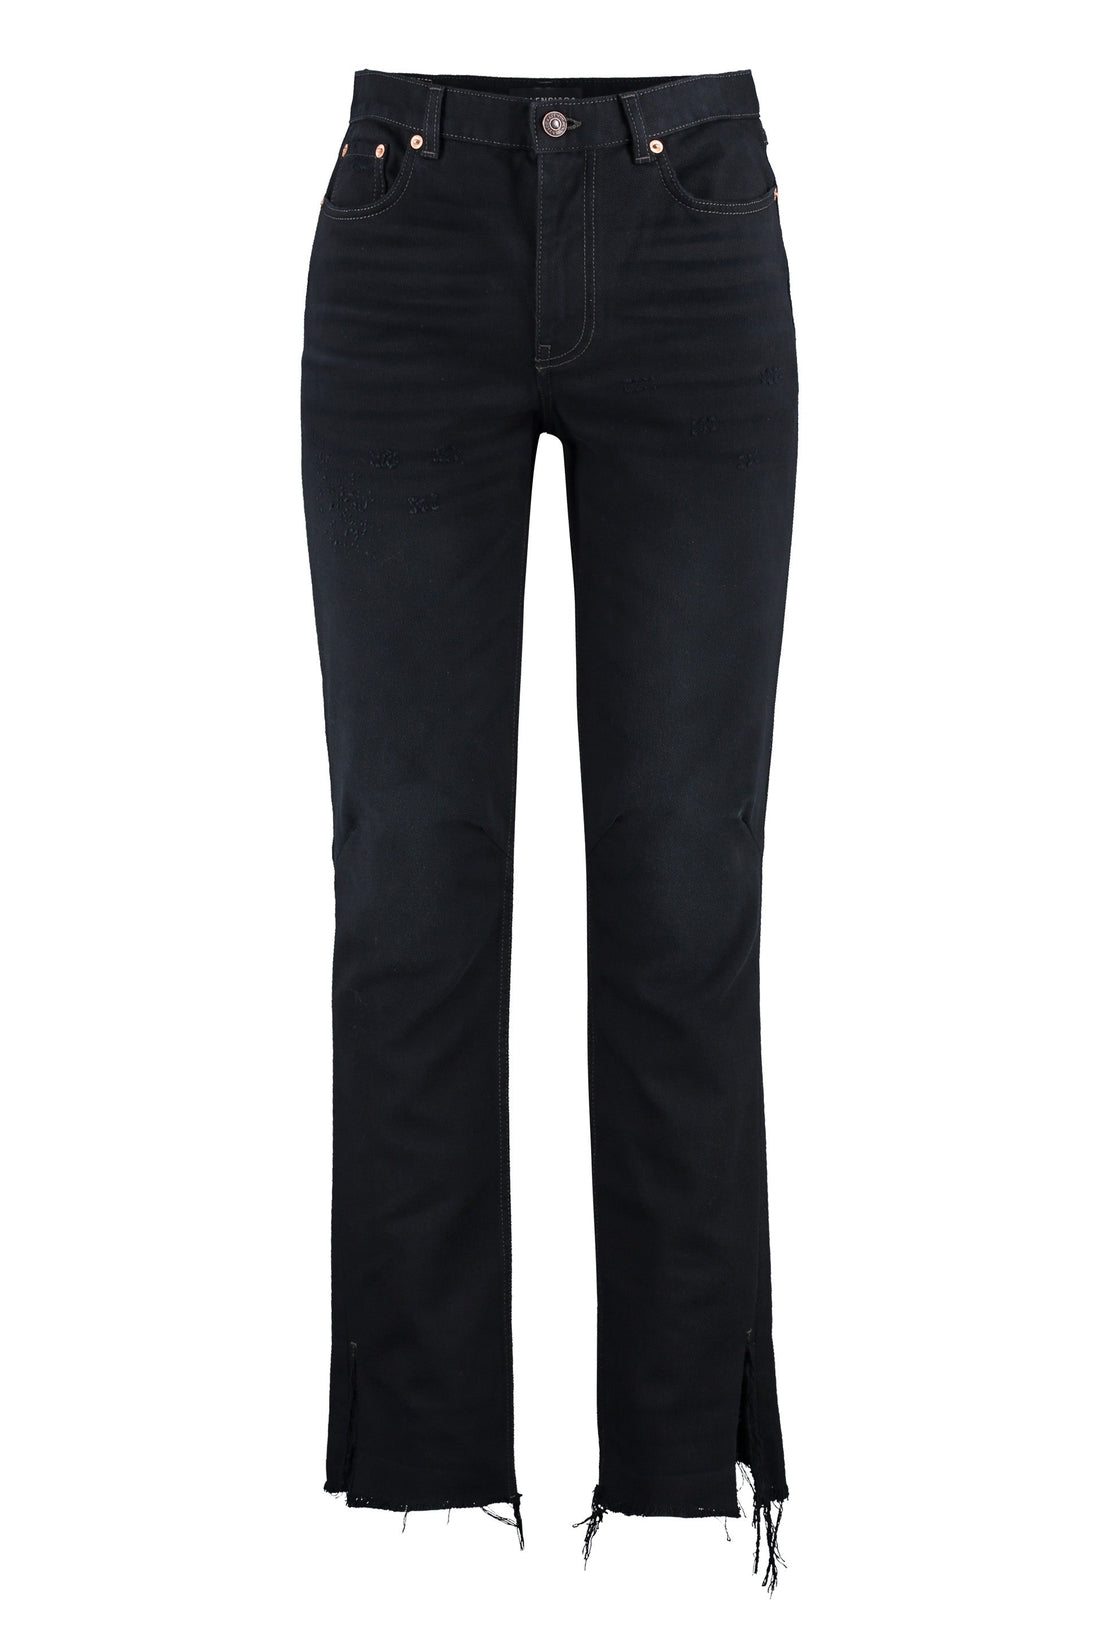 Balenciaga-OUTLET-SALE-5-pocket skinny jeans-ARCHIVIST